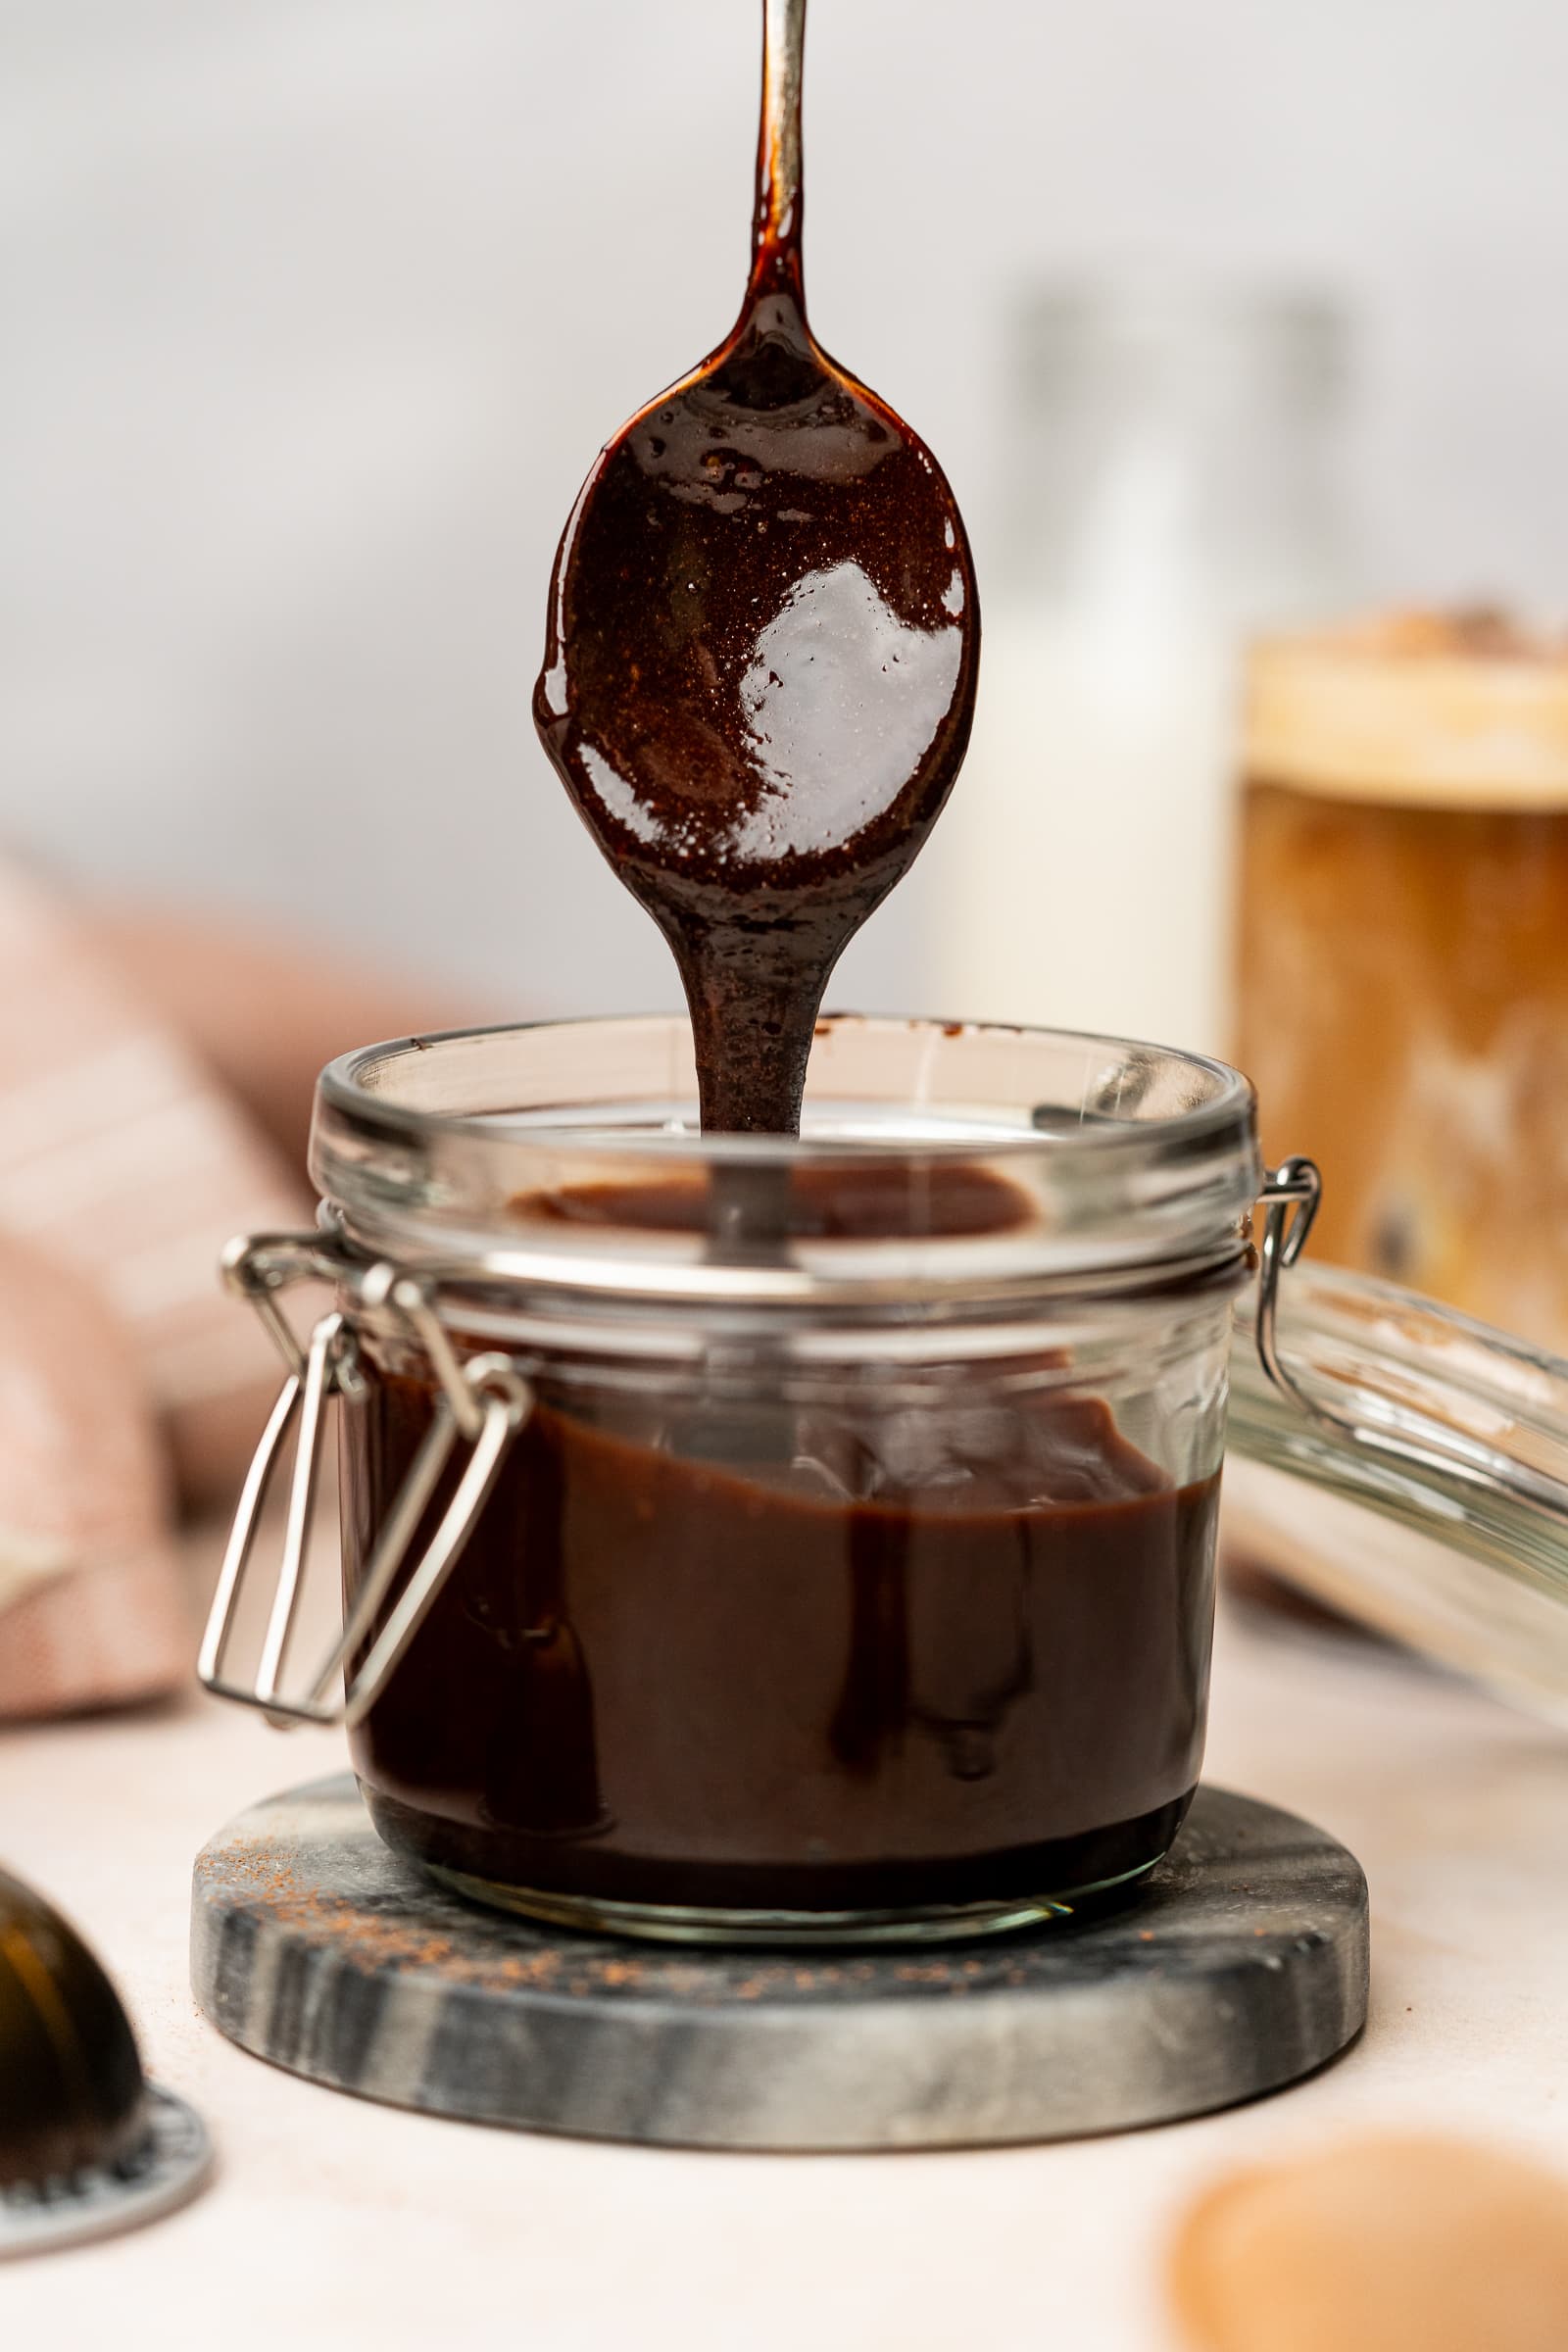 Chocolate sauce in a jar.